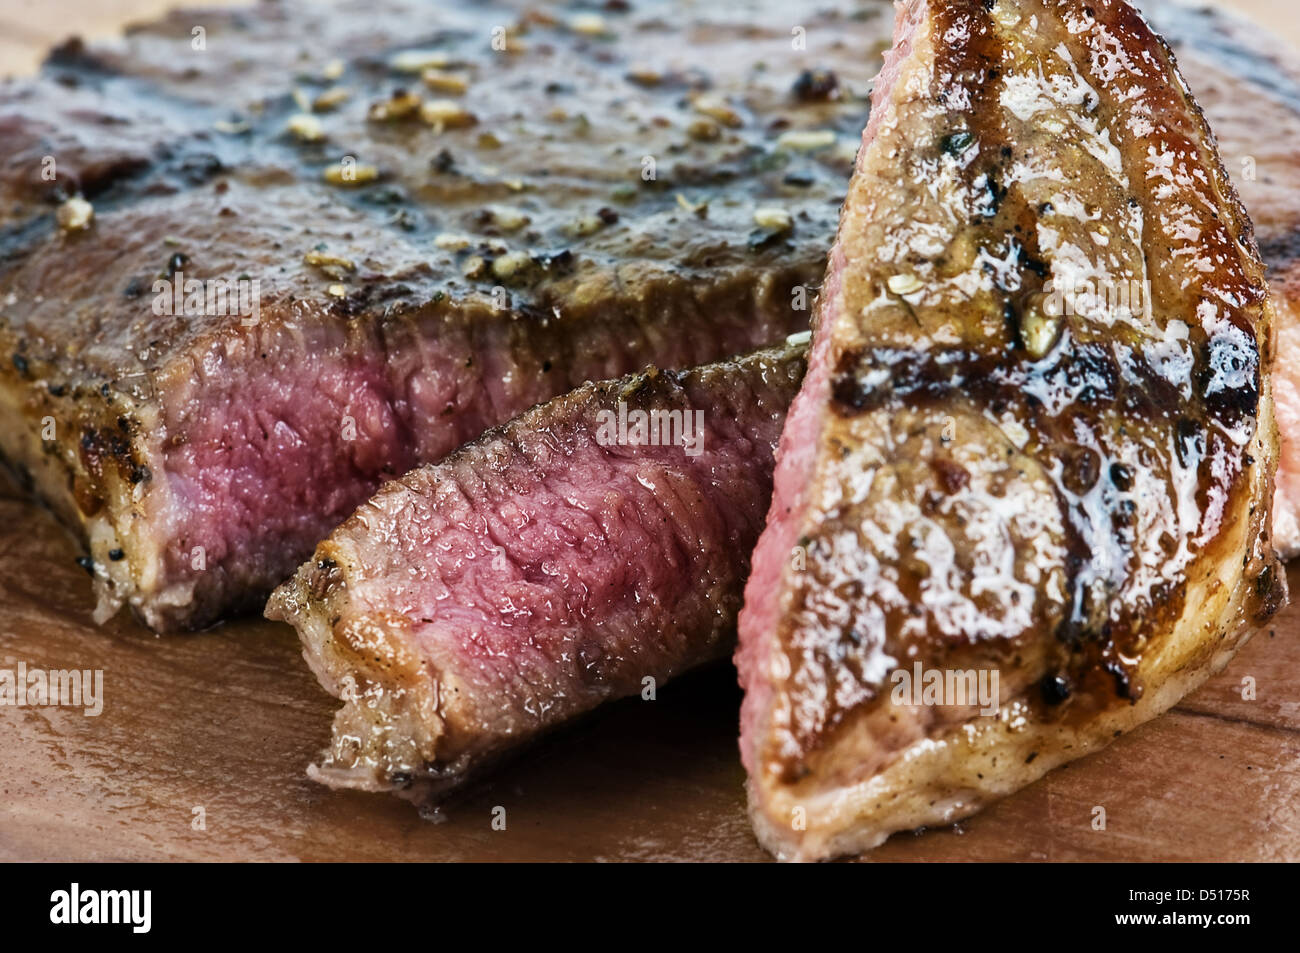 juicy striped steak on wood table Stock Photo